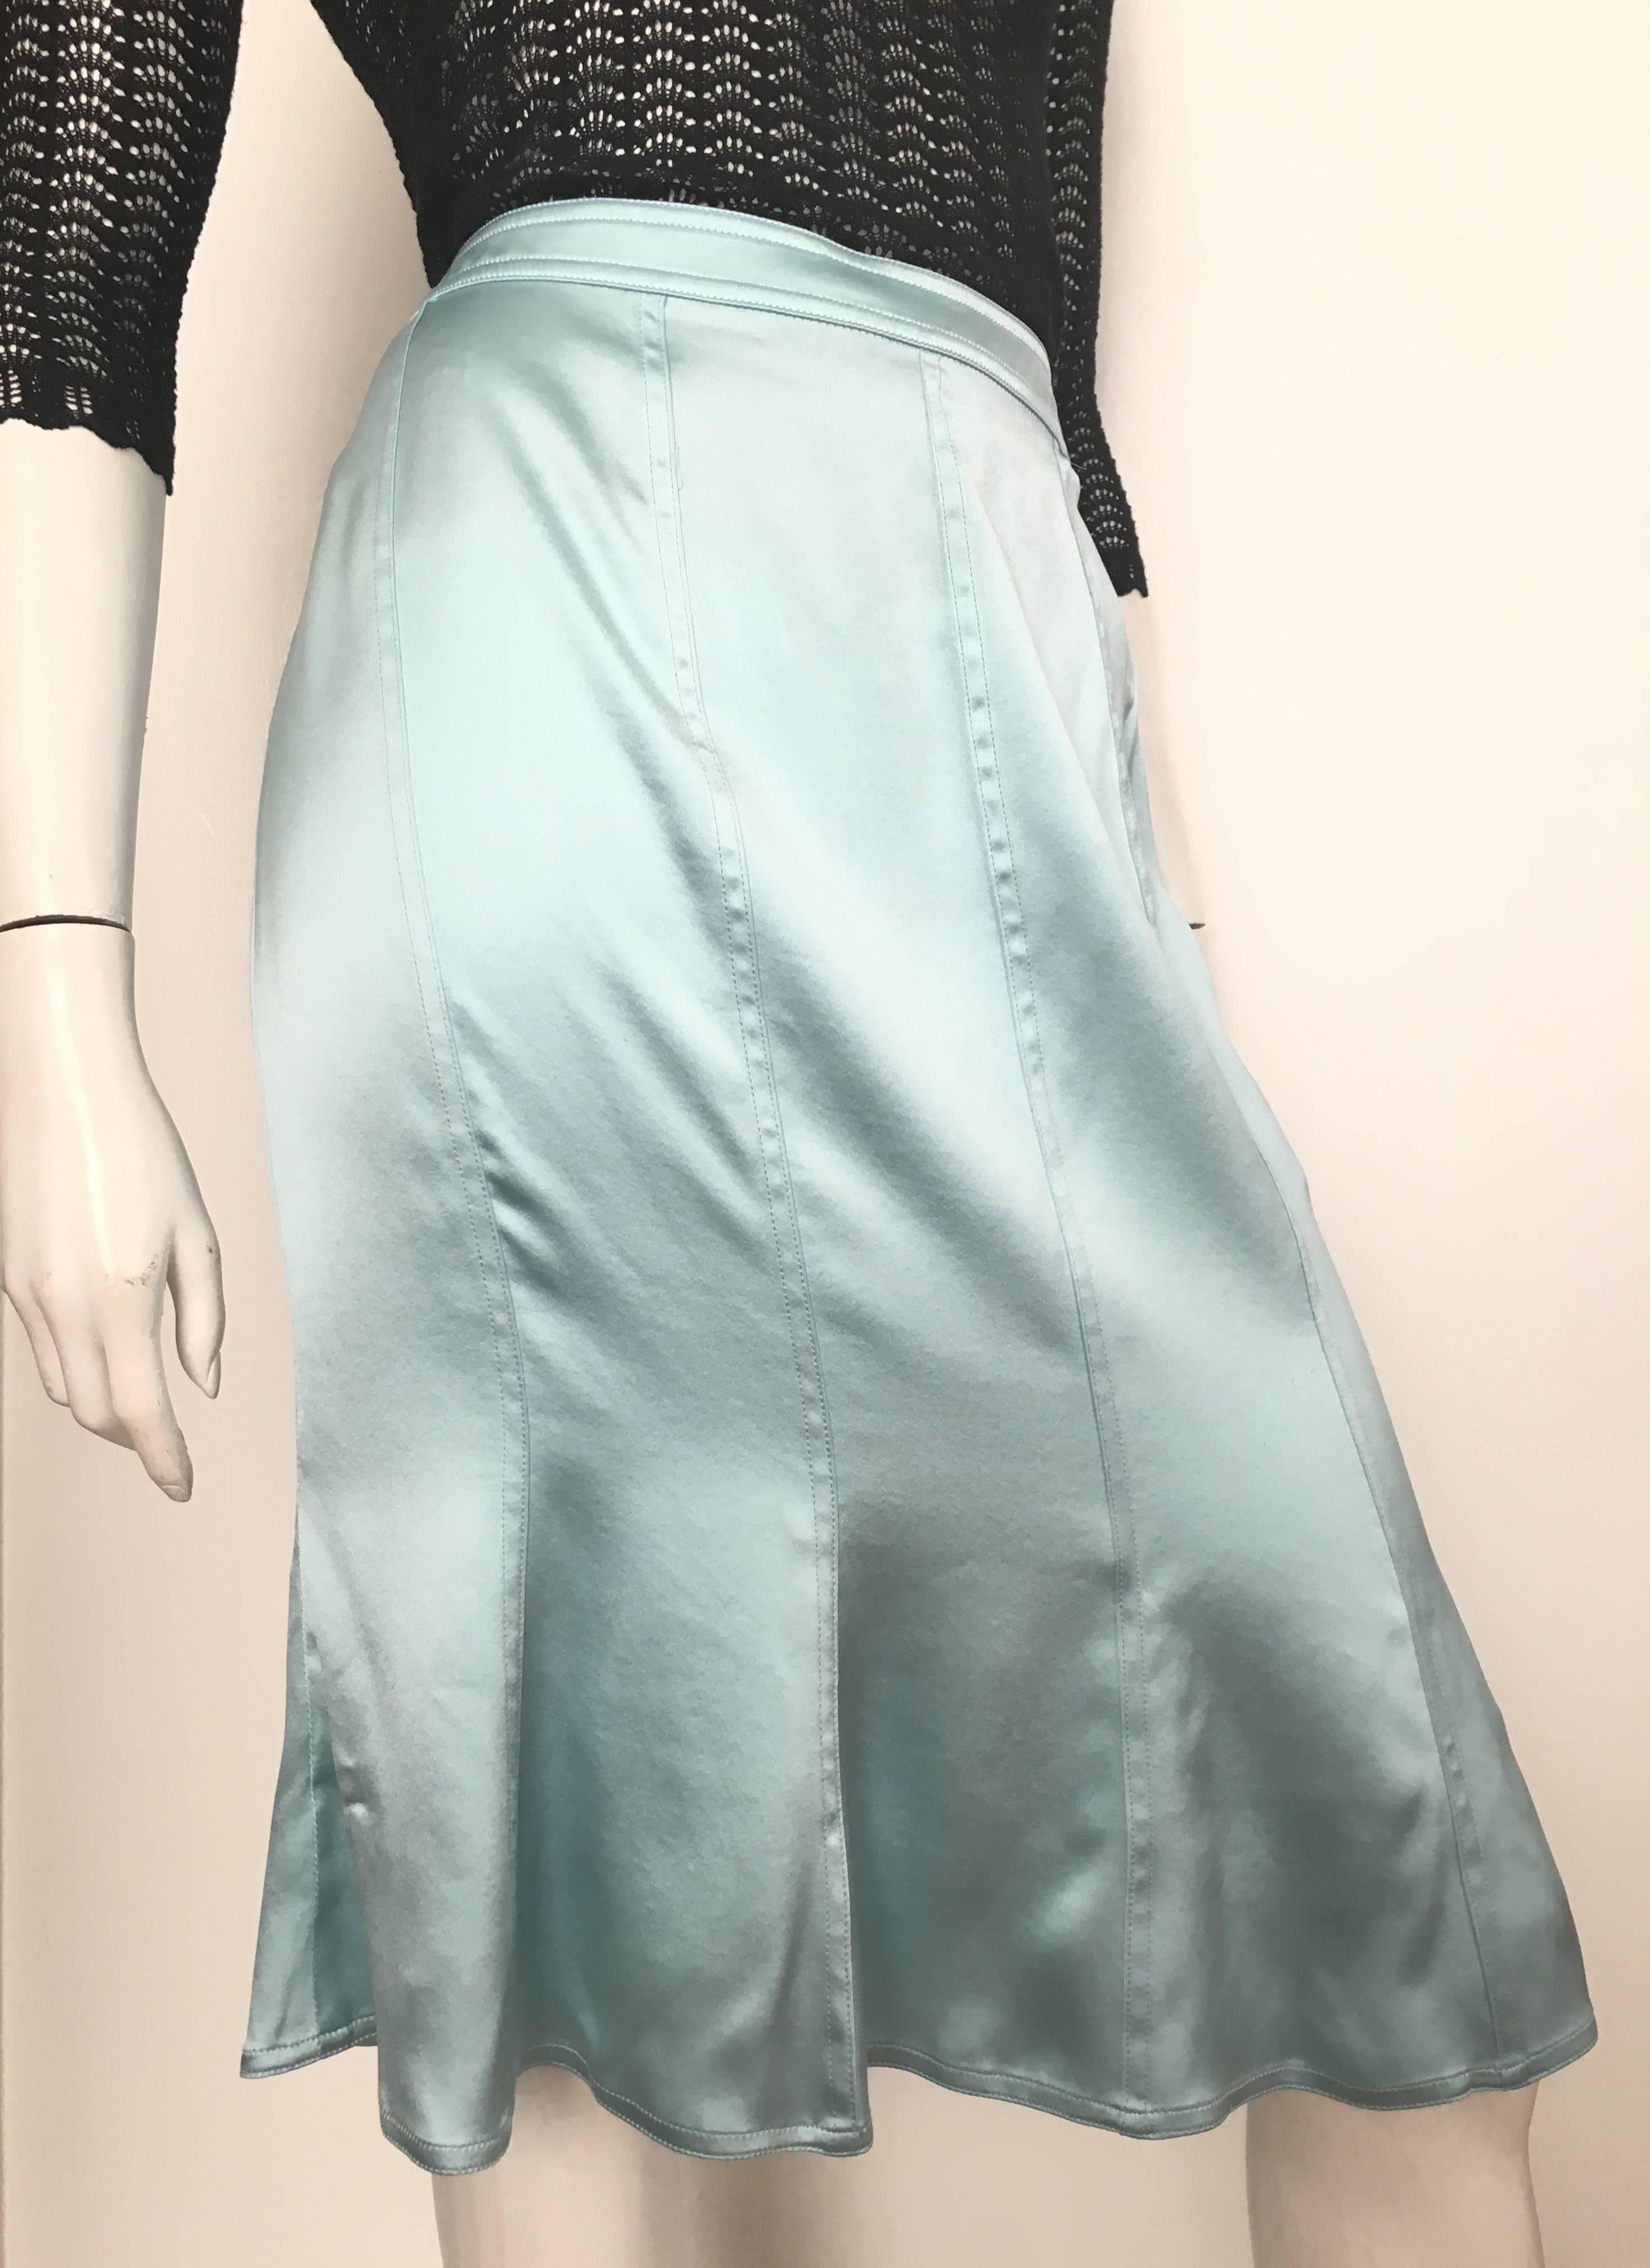 Yves Saint Laurent by Tom Ford Aqua Silk Skirt Size 10  For Sale 3